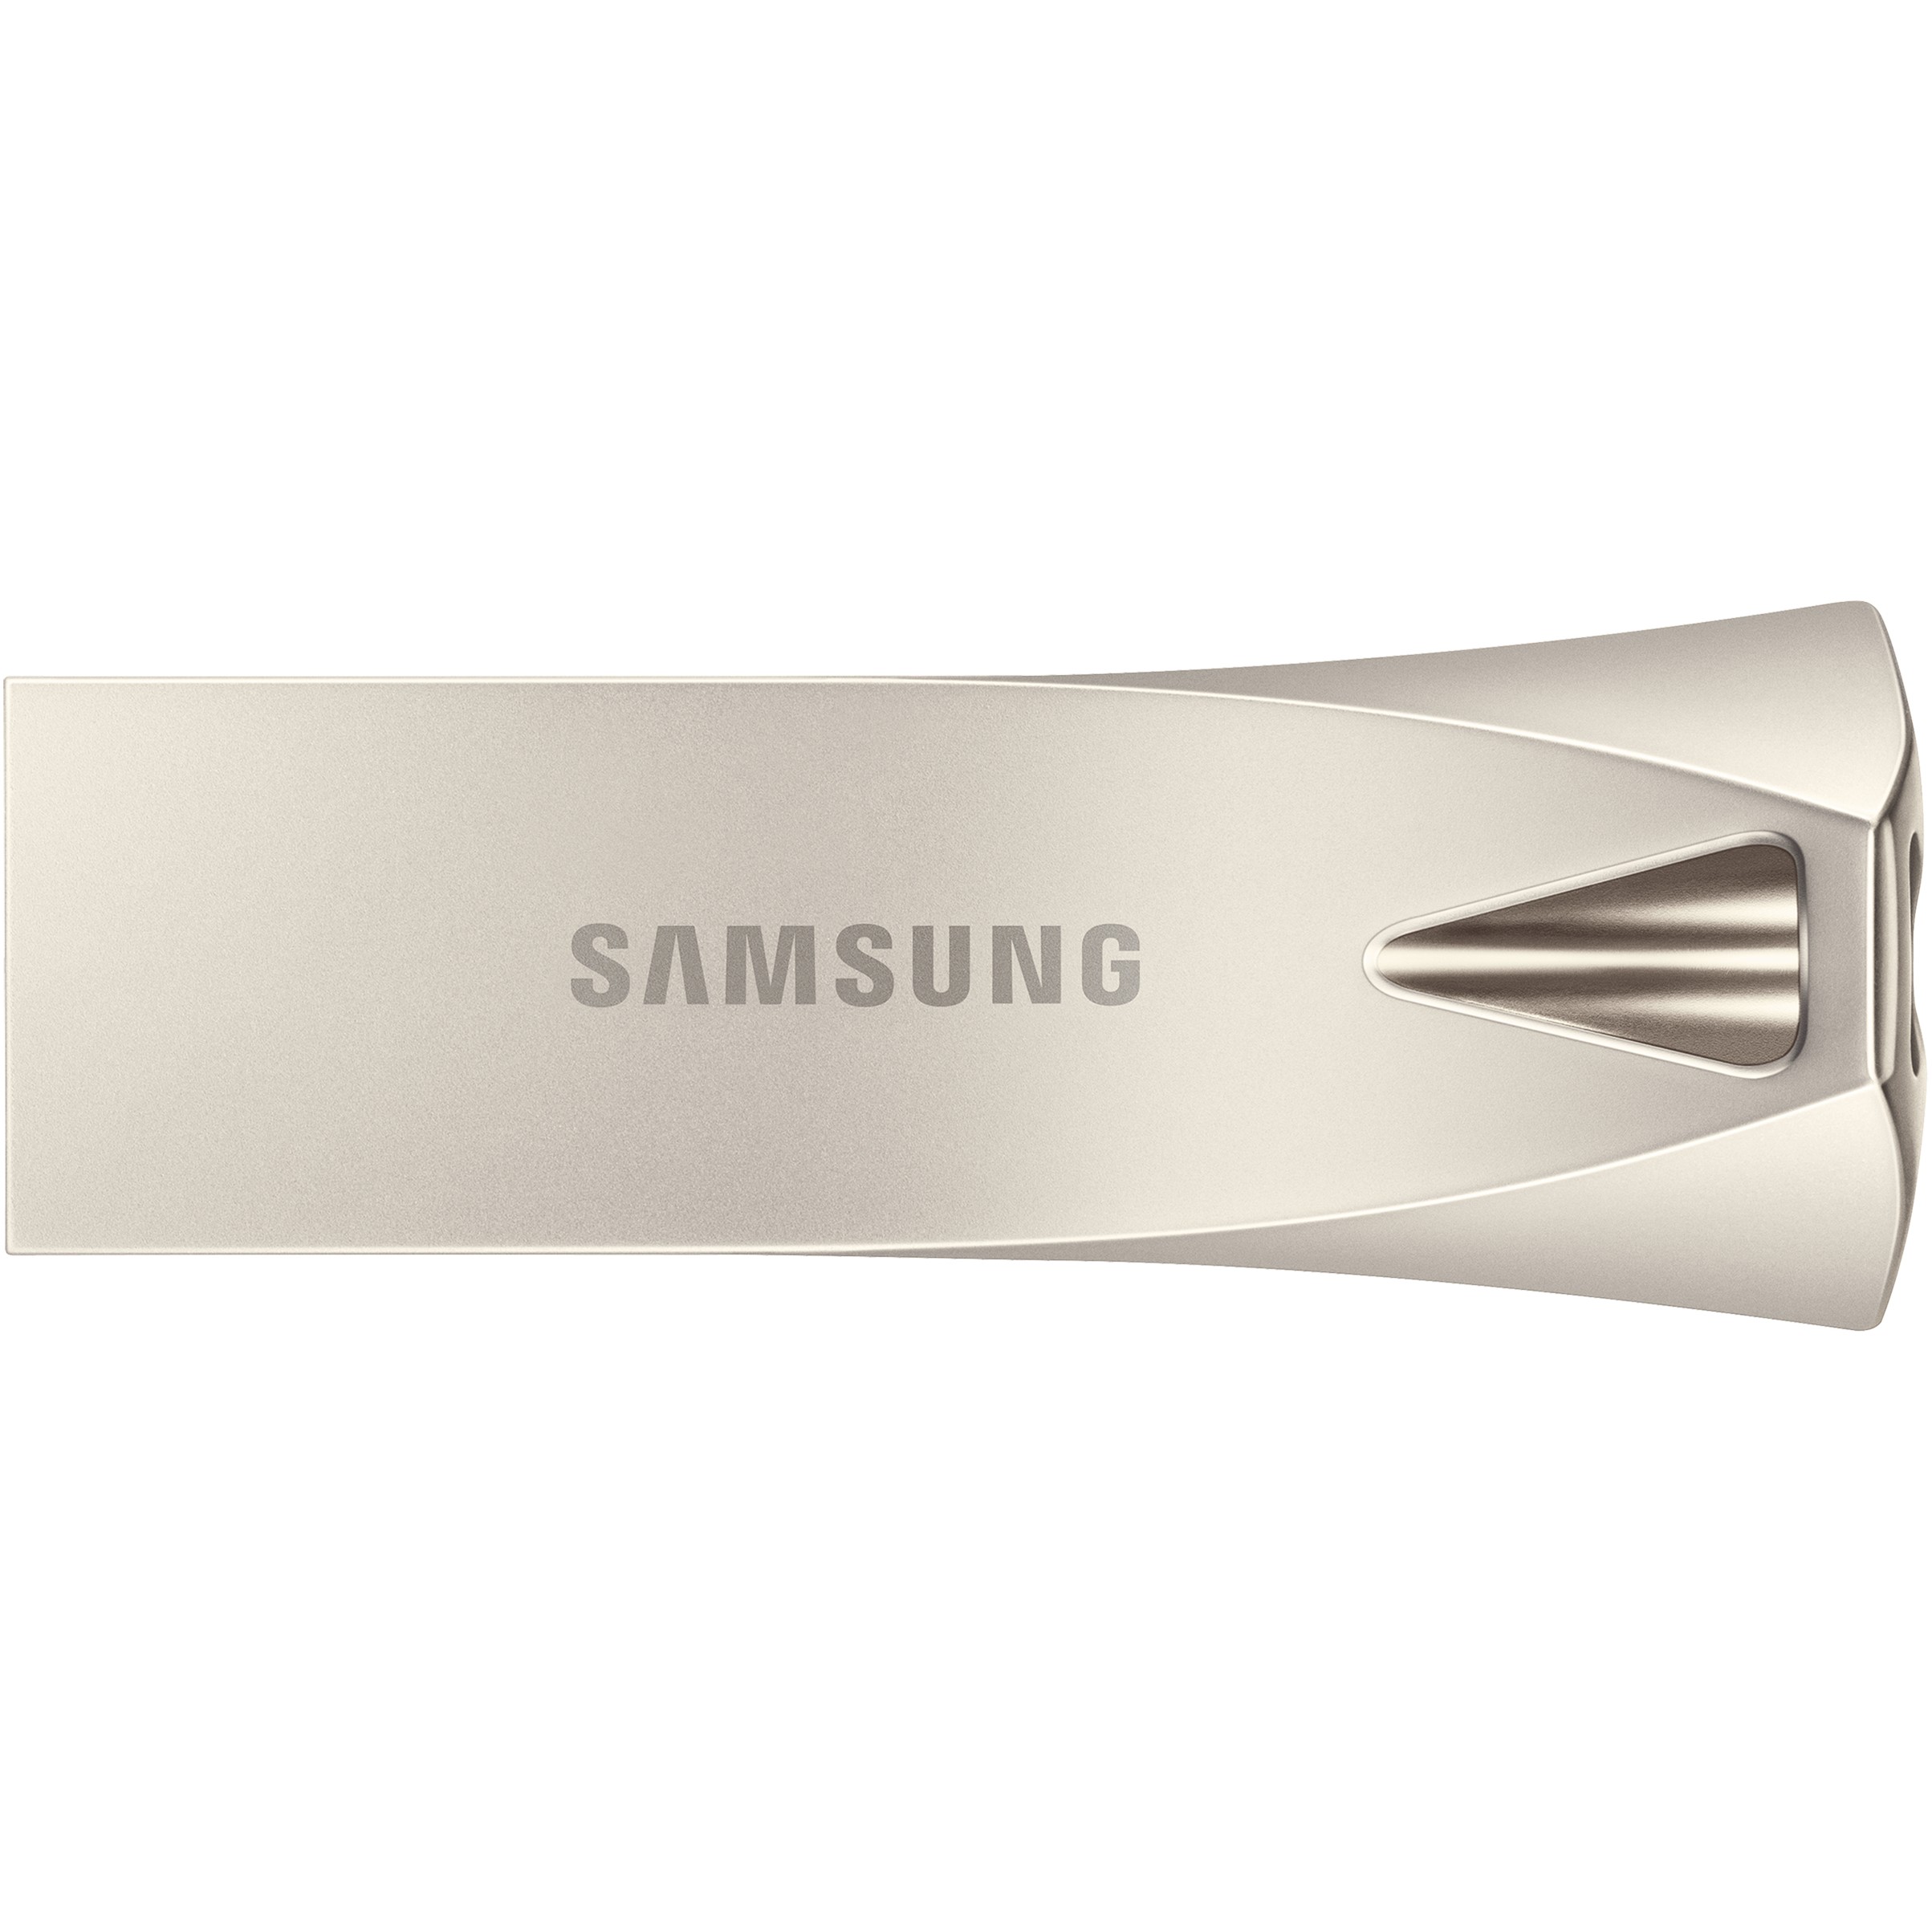 Samsung MUF-128BE USB flash drive - MUF-128BE3/APC